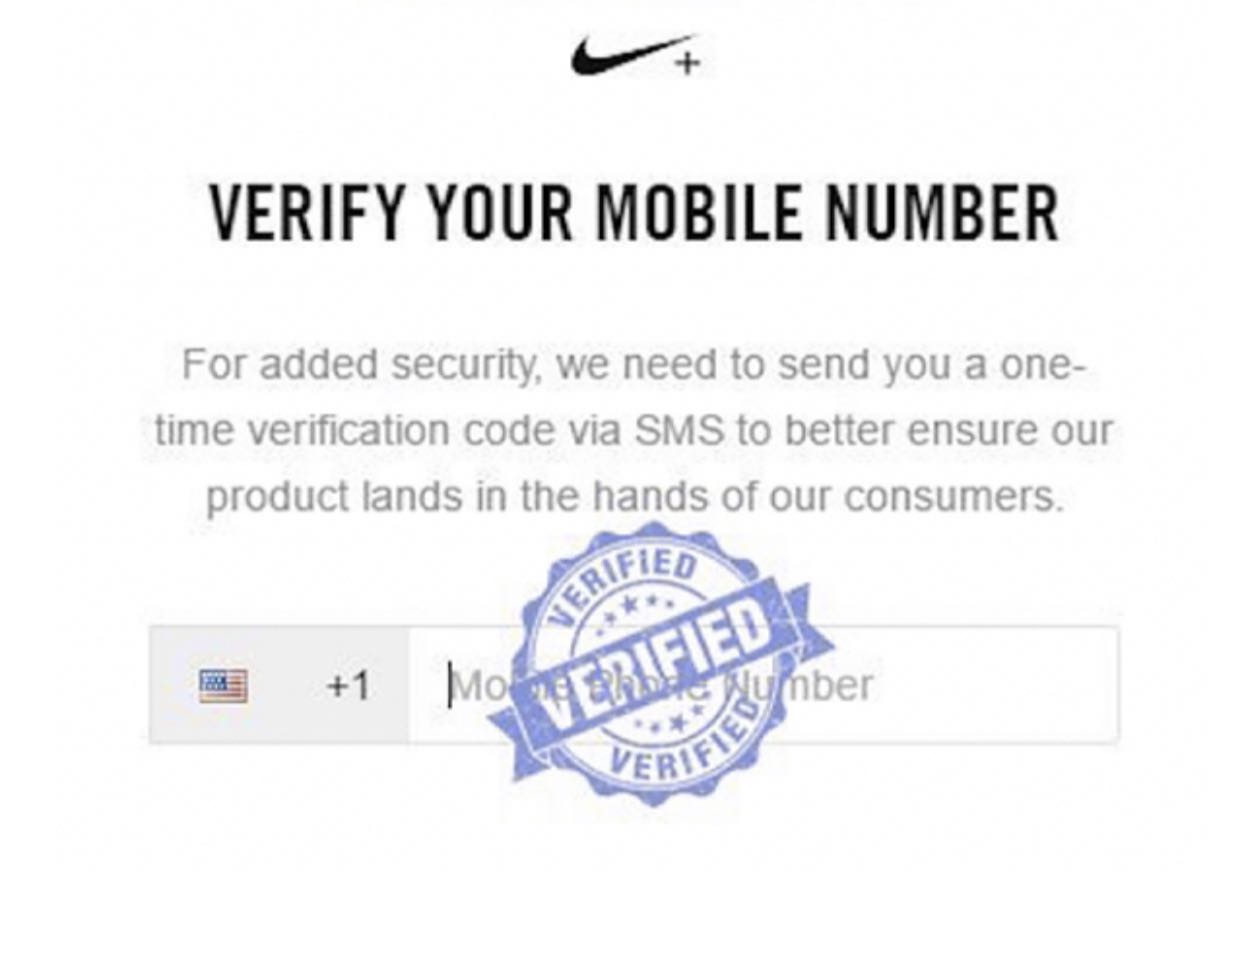 snkrs phone number verification